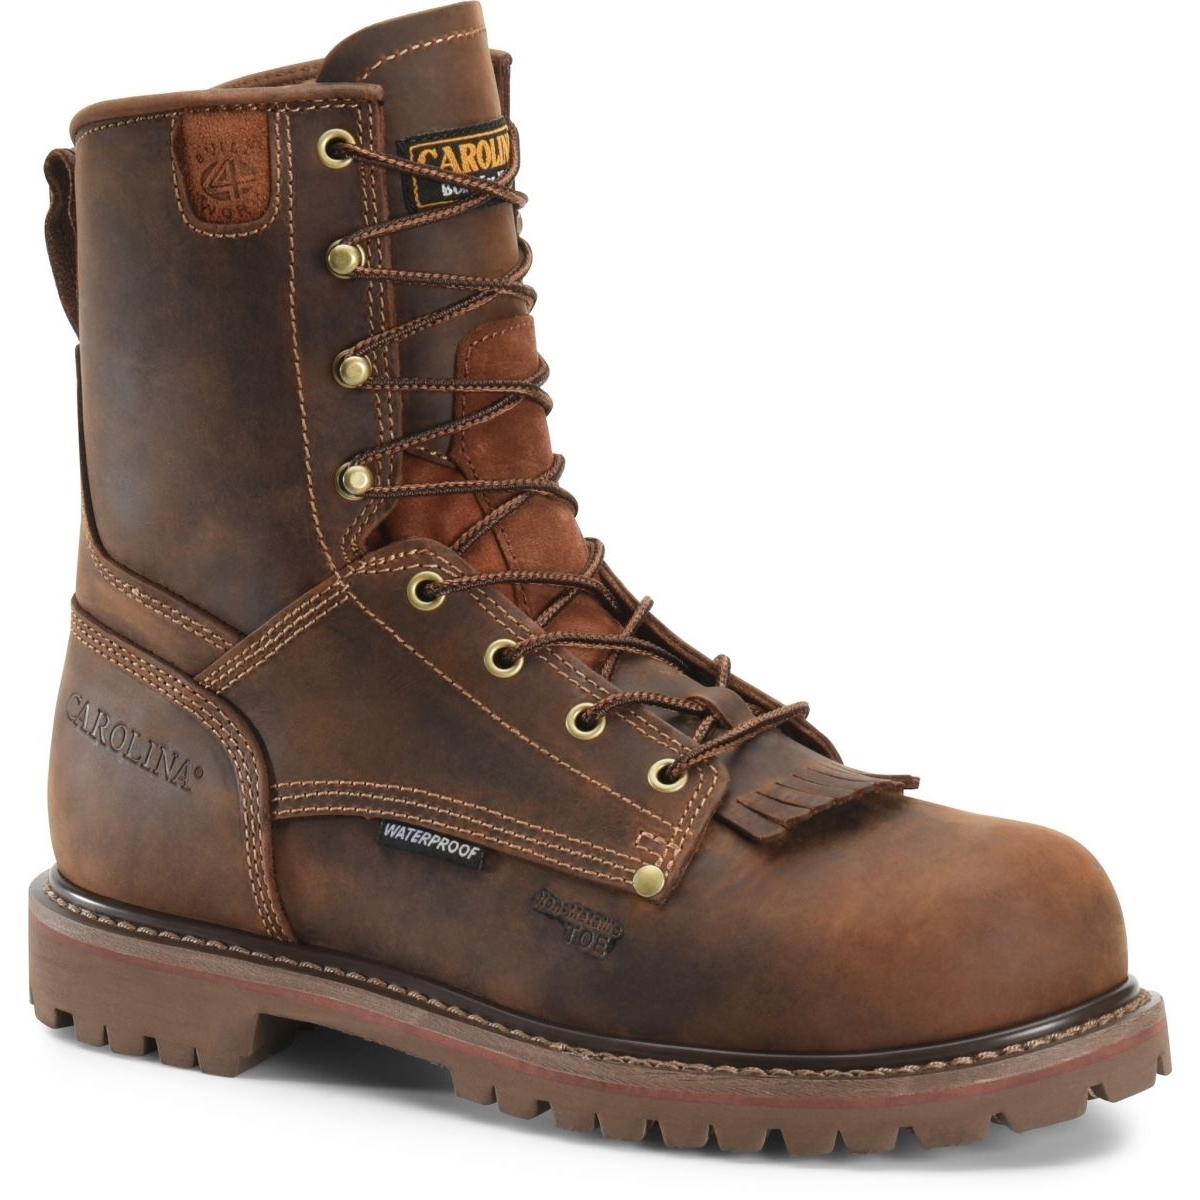 CAROLINA Men's 28 Series 8 Composite Toe Waterproof Work Boot Brown - CA8528 DARK BROWN - DARK BROWN, 9 Wide